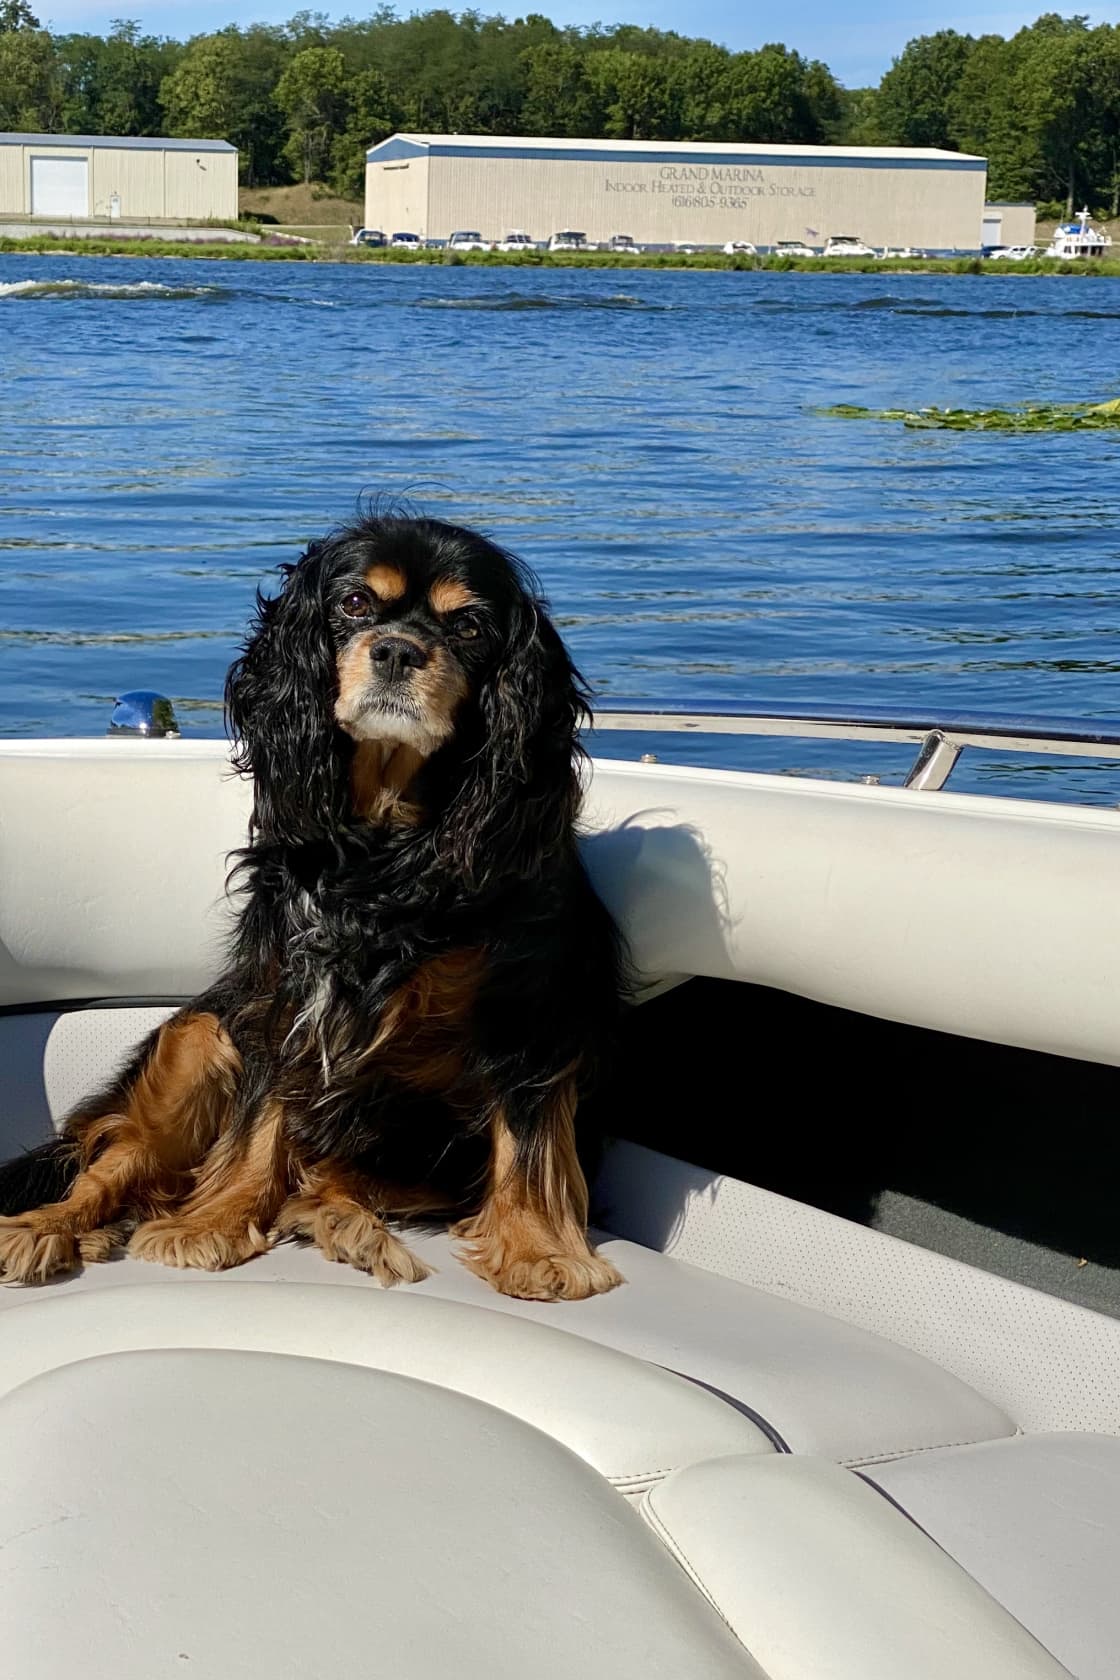 The family boat queen, "Zoe".